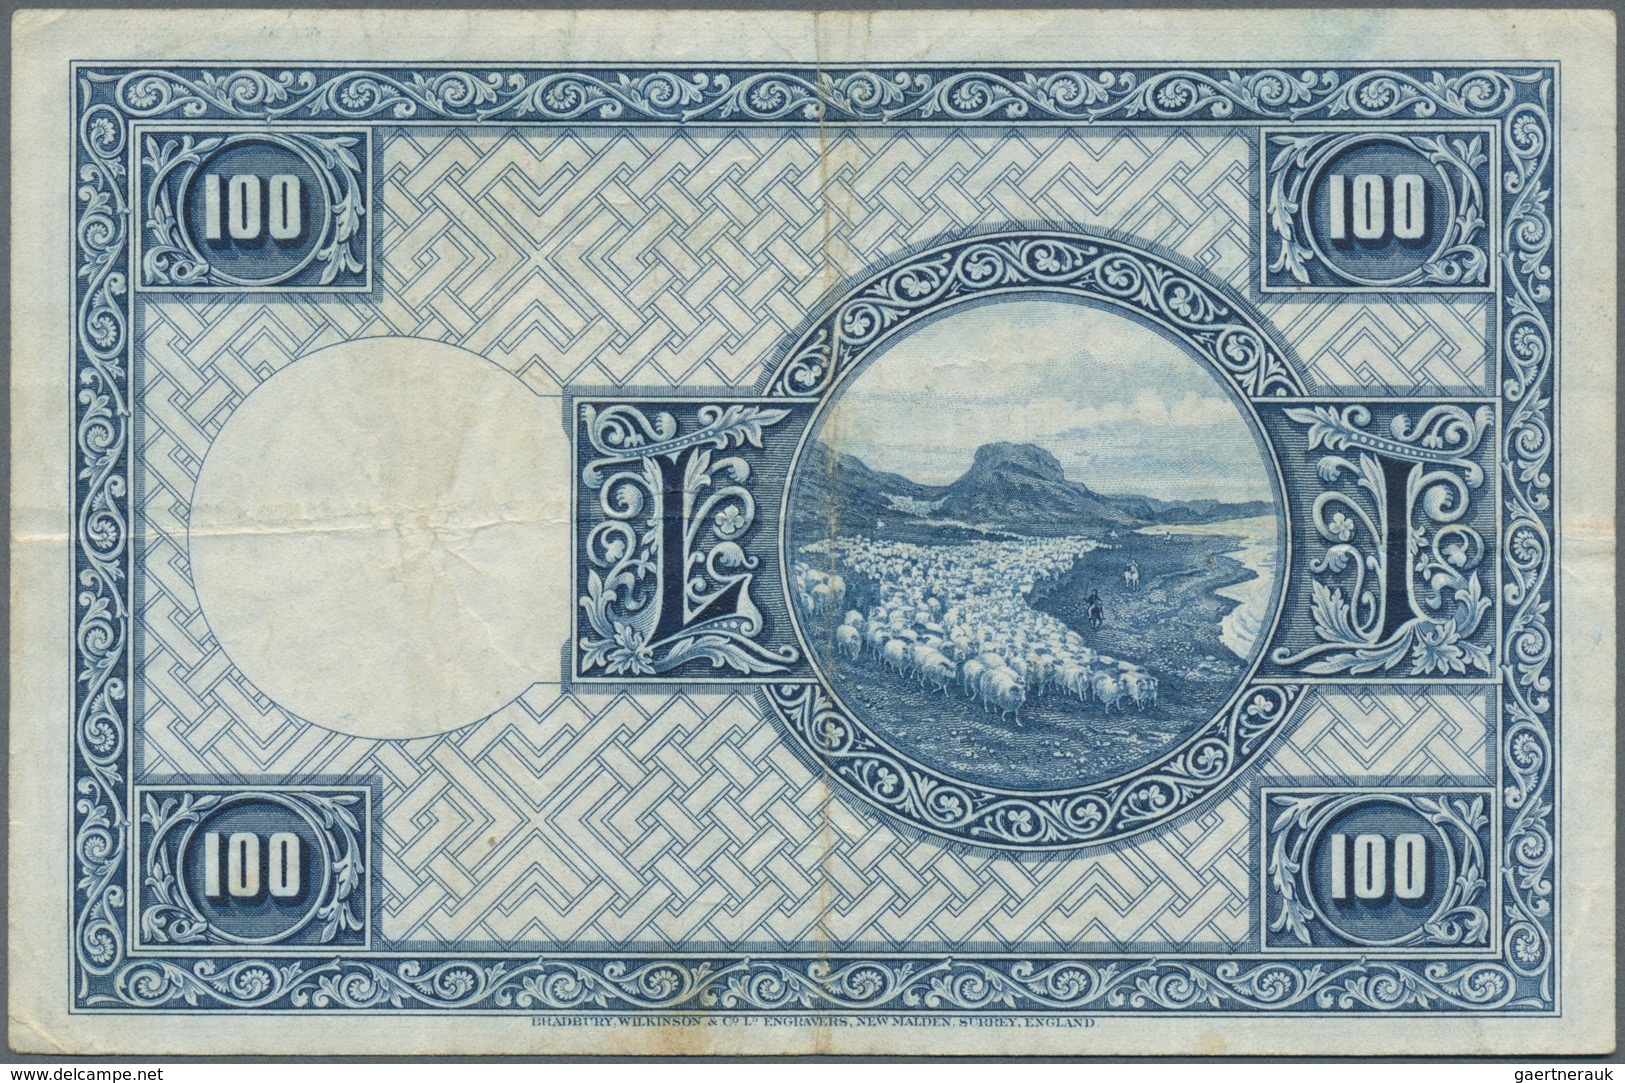 Iceland / Island: Landsbanki Íslands 100 Kronur L. 15.04.1928, P.35a, Still Nice With A Few Folds An - Iceland